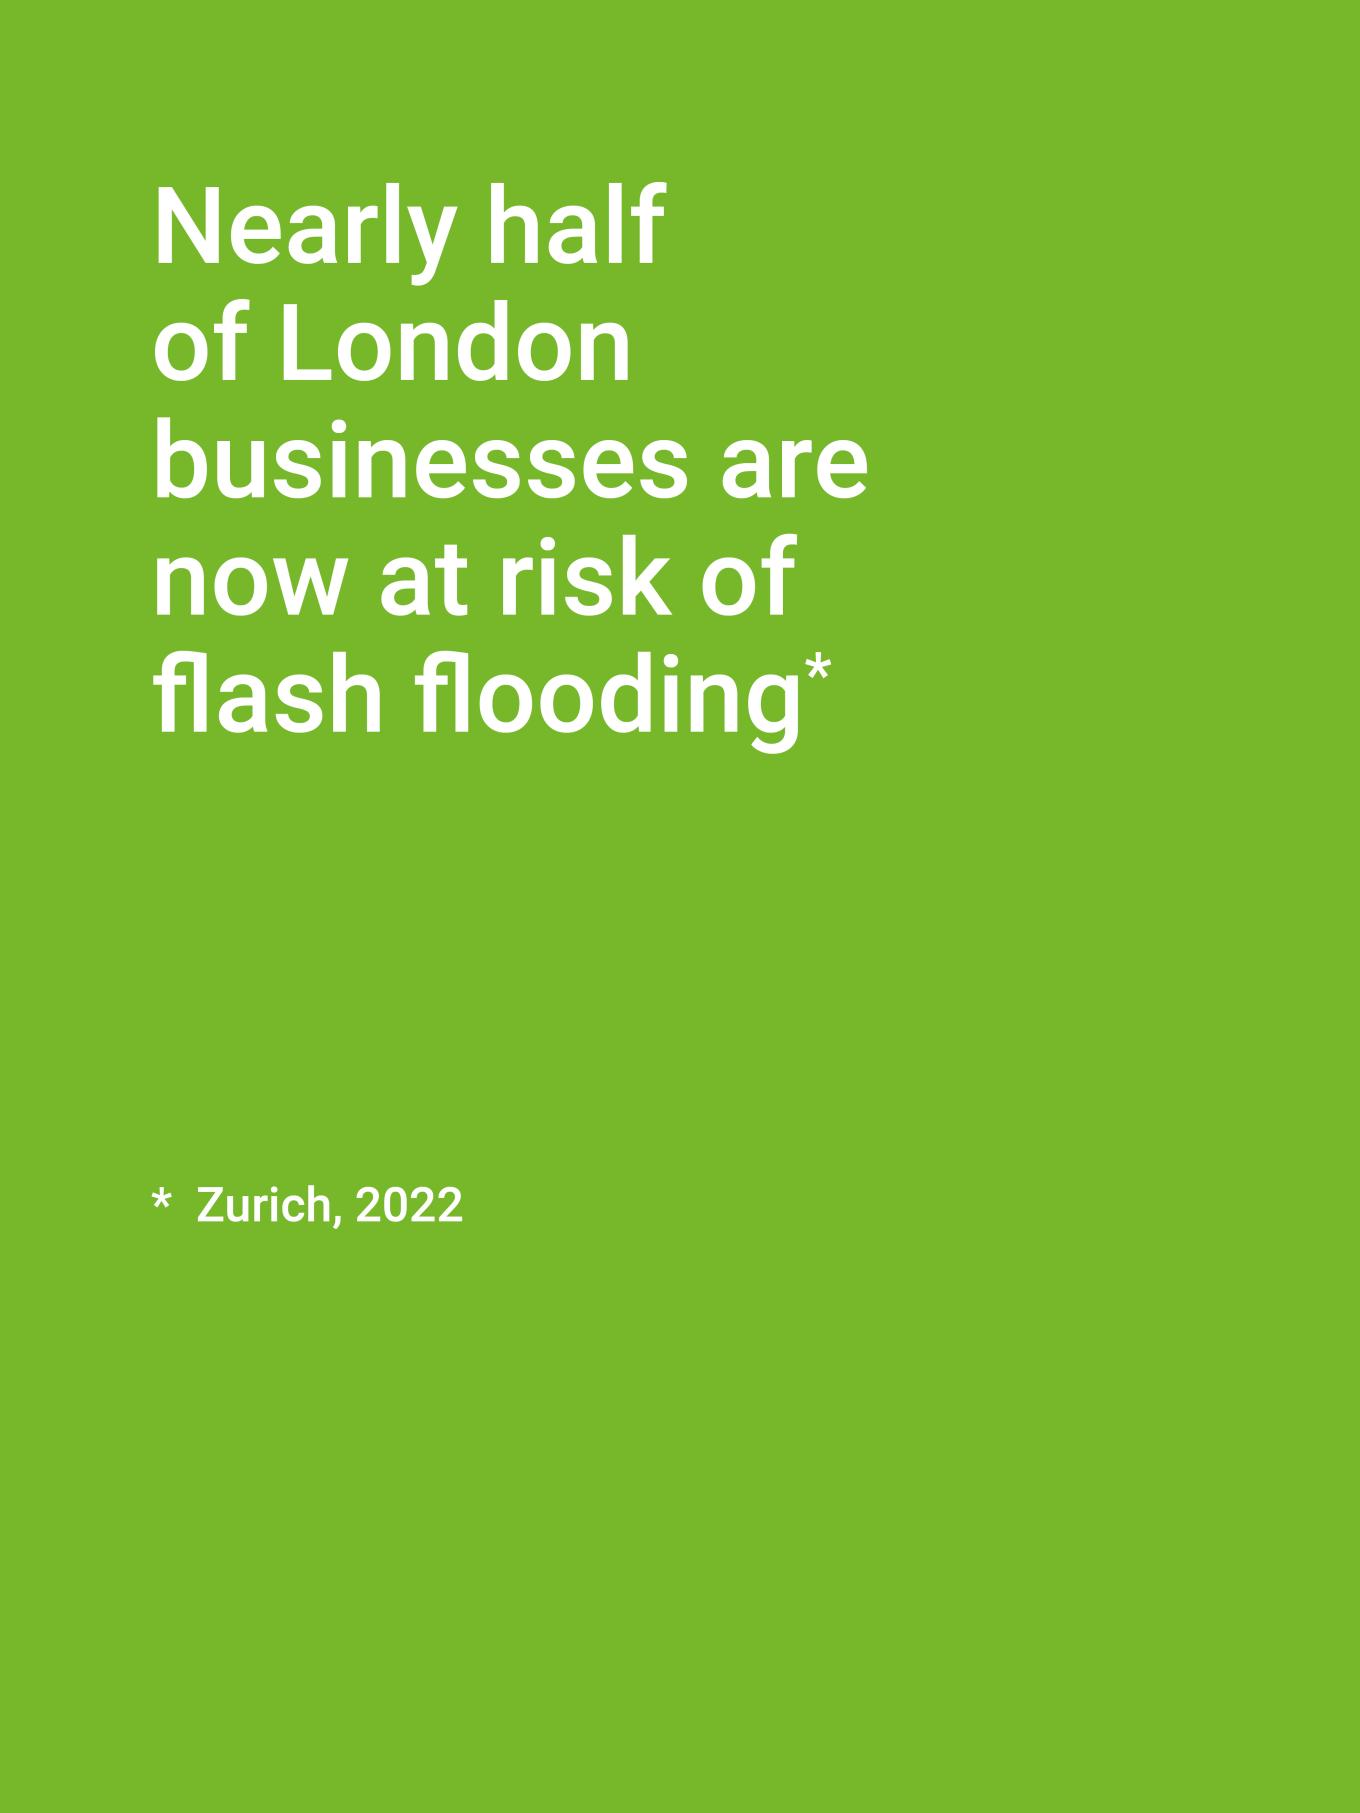 flash flooding risk